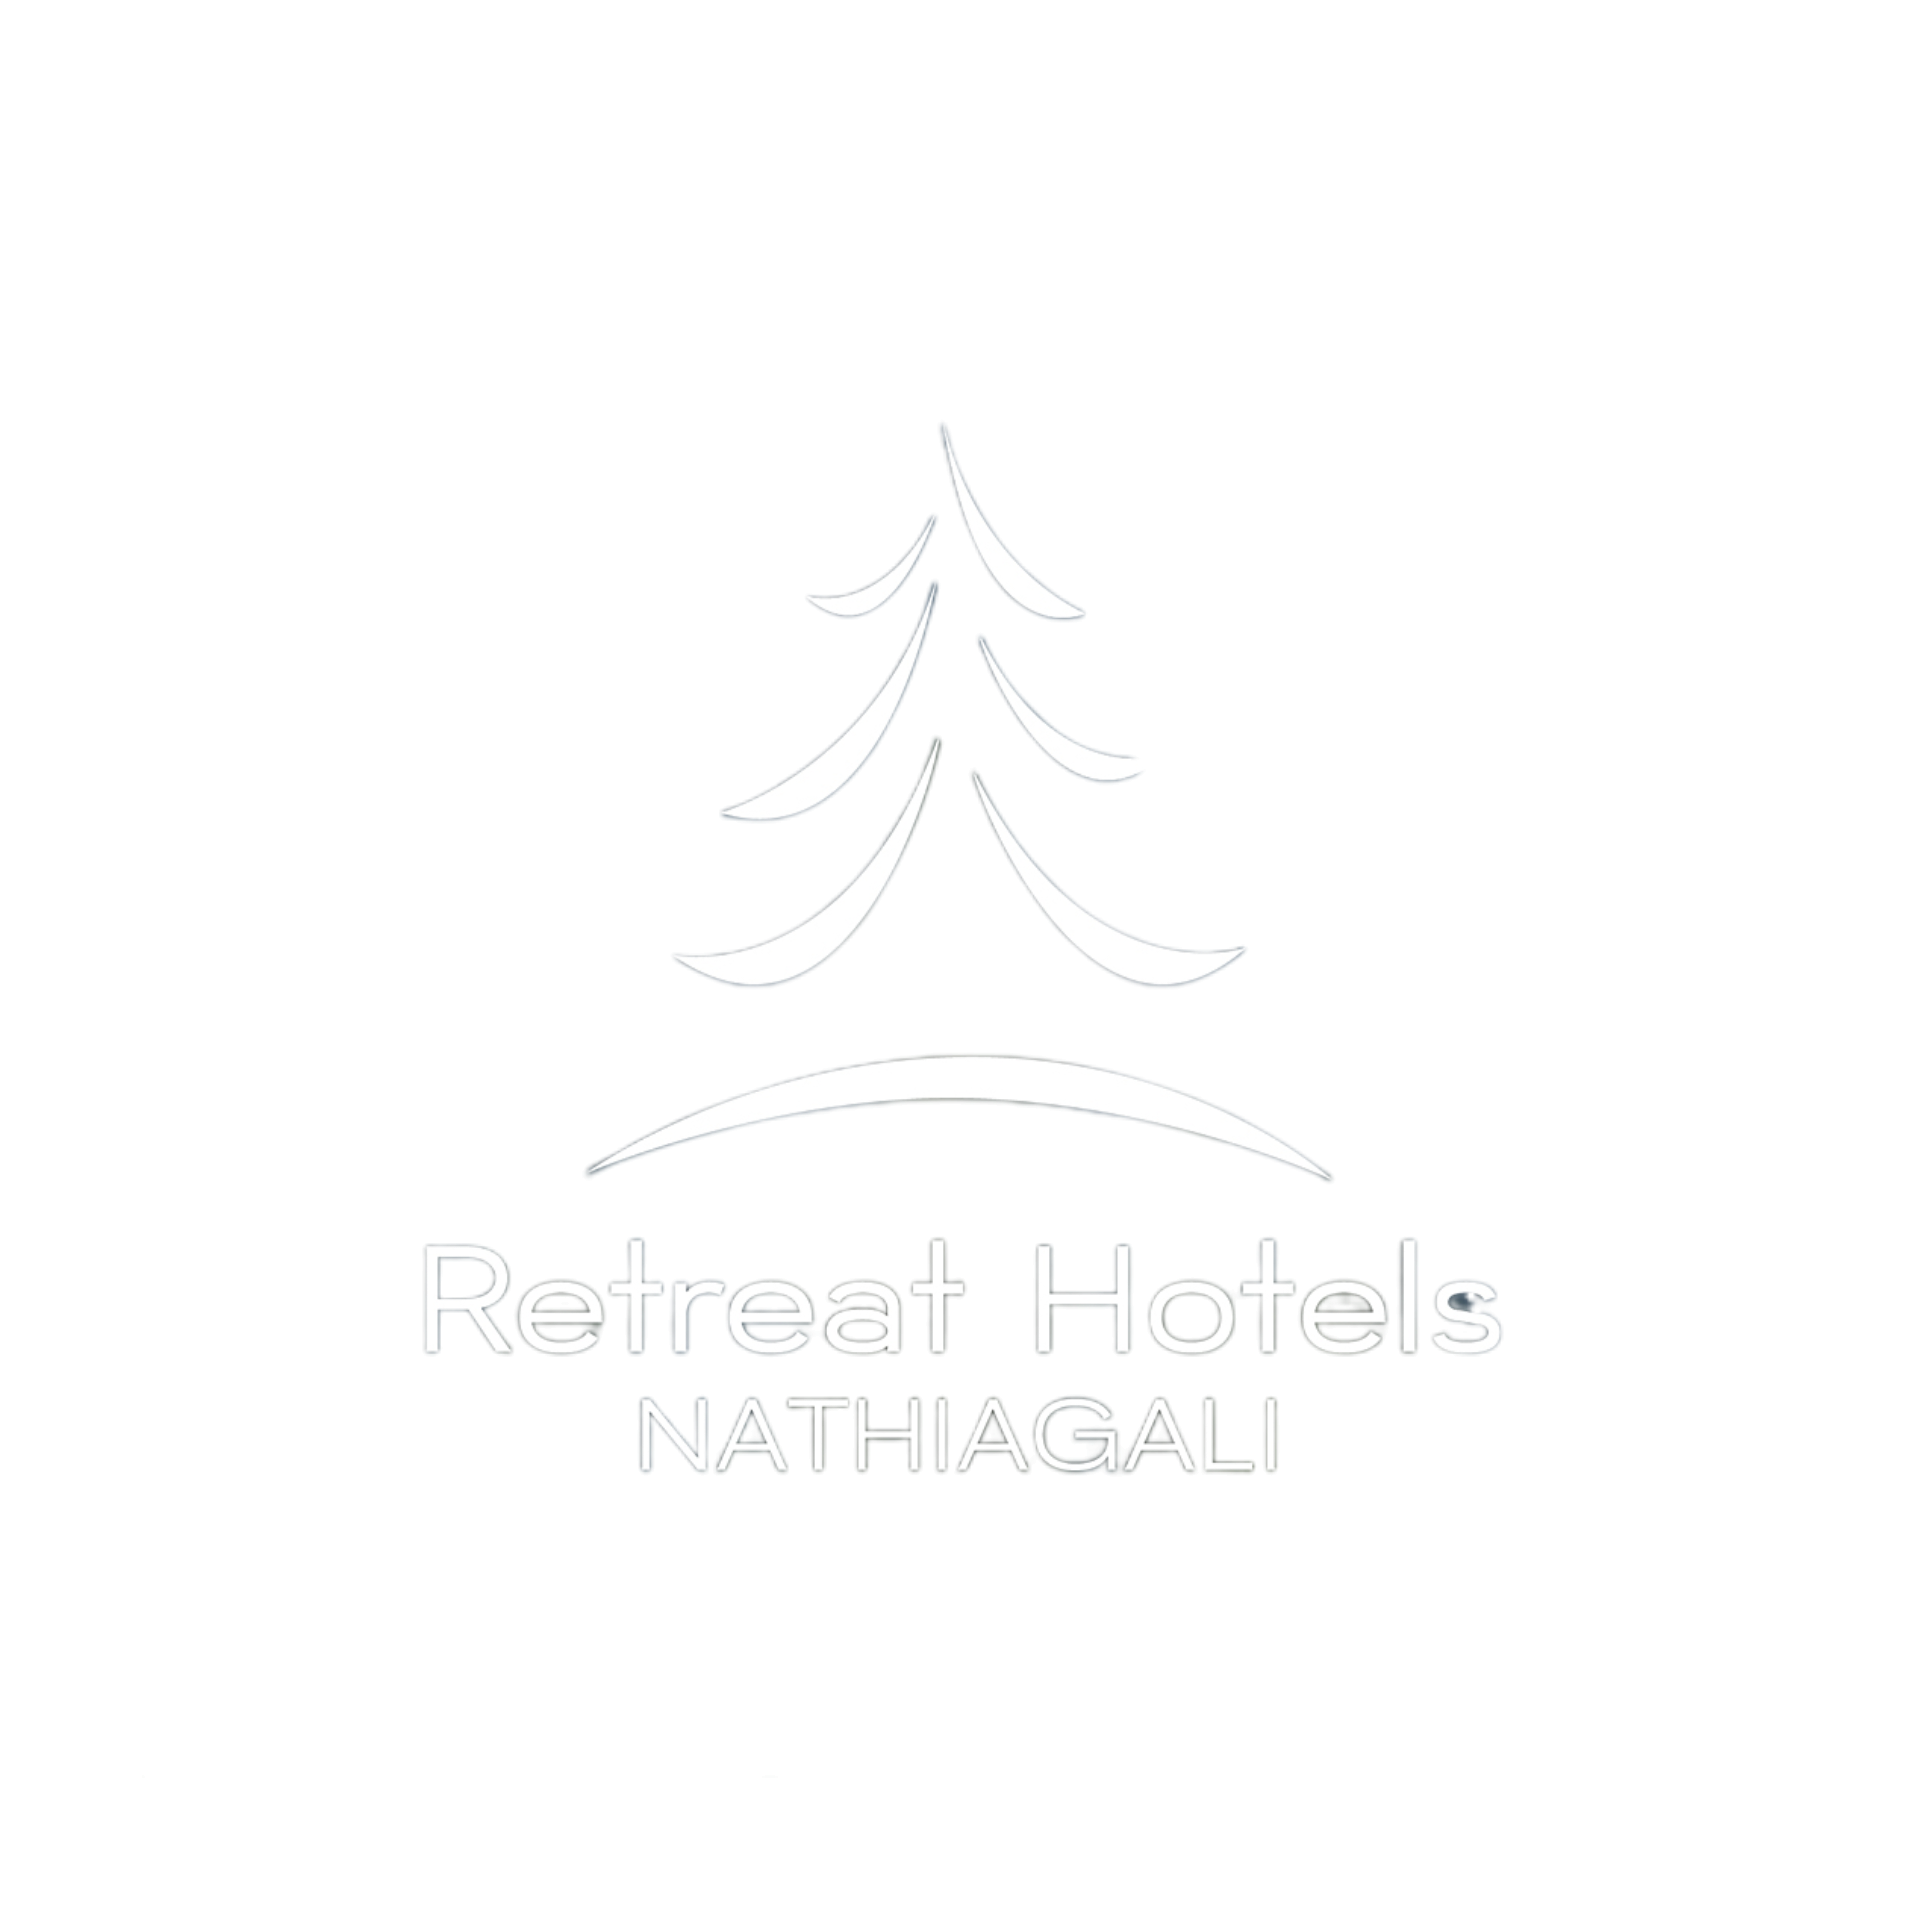 Retreat Hotels Nathiagali